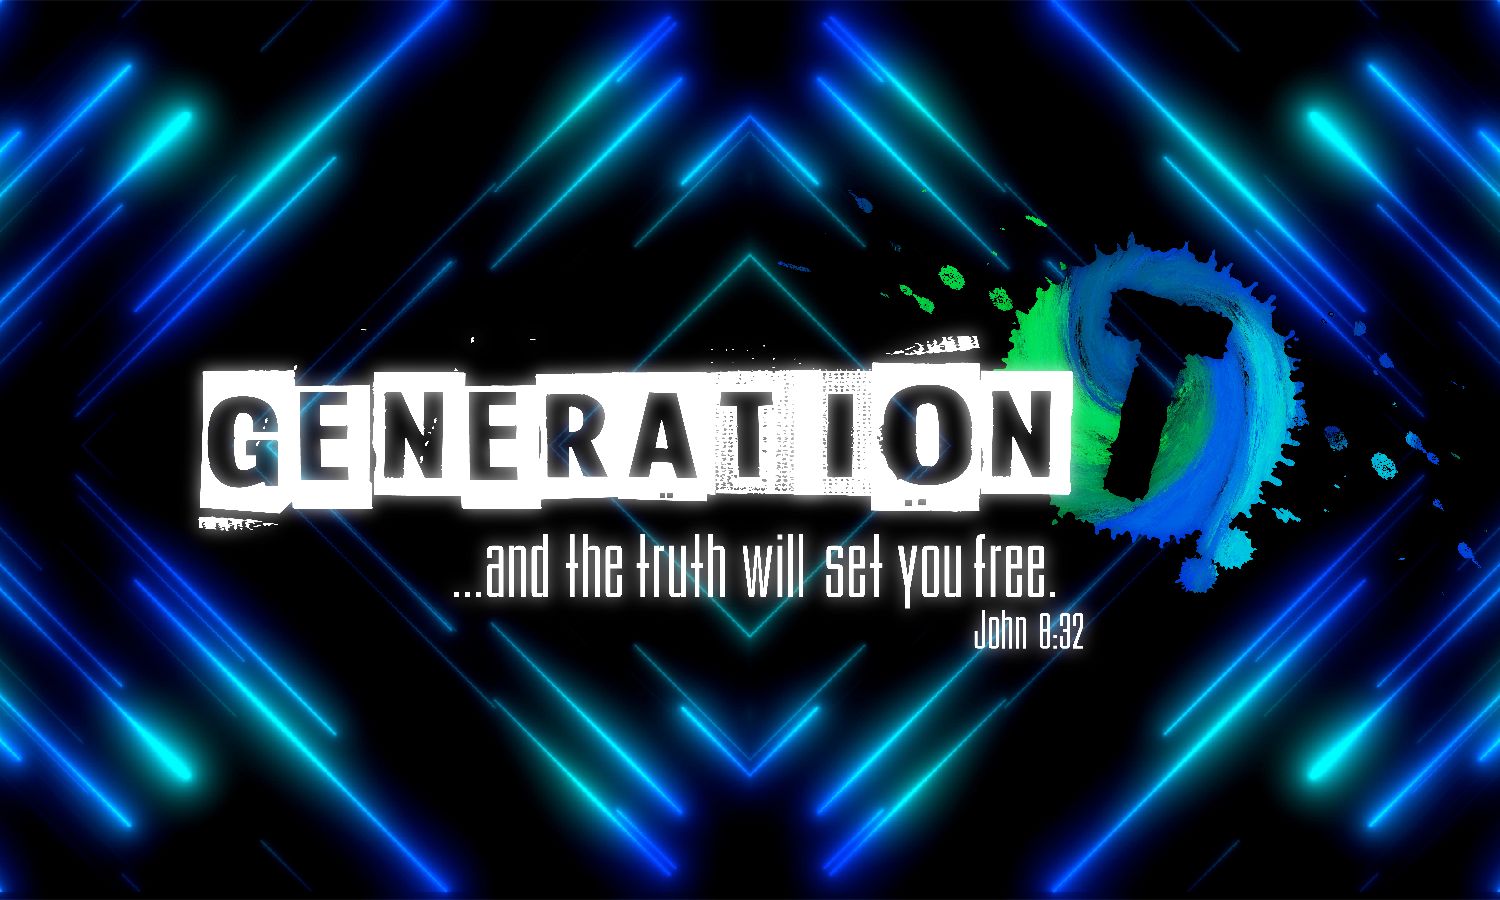 GenerationT